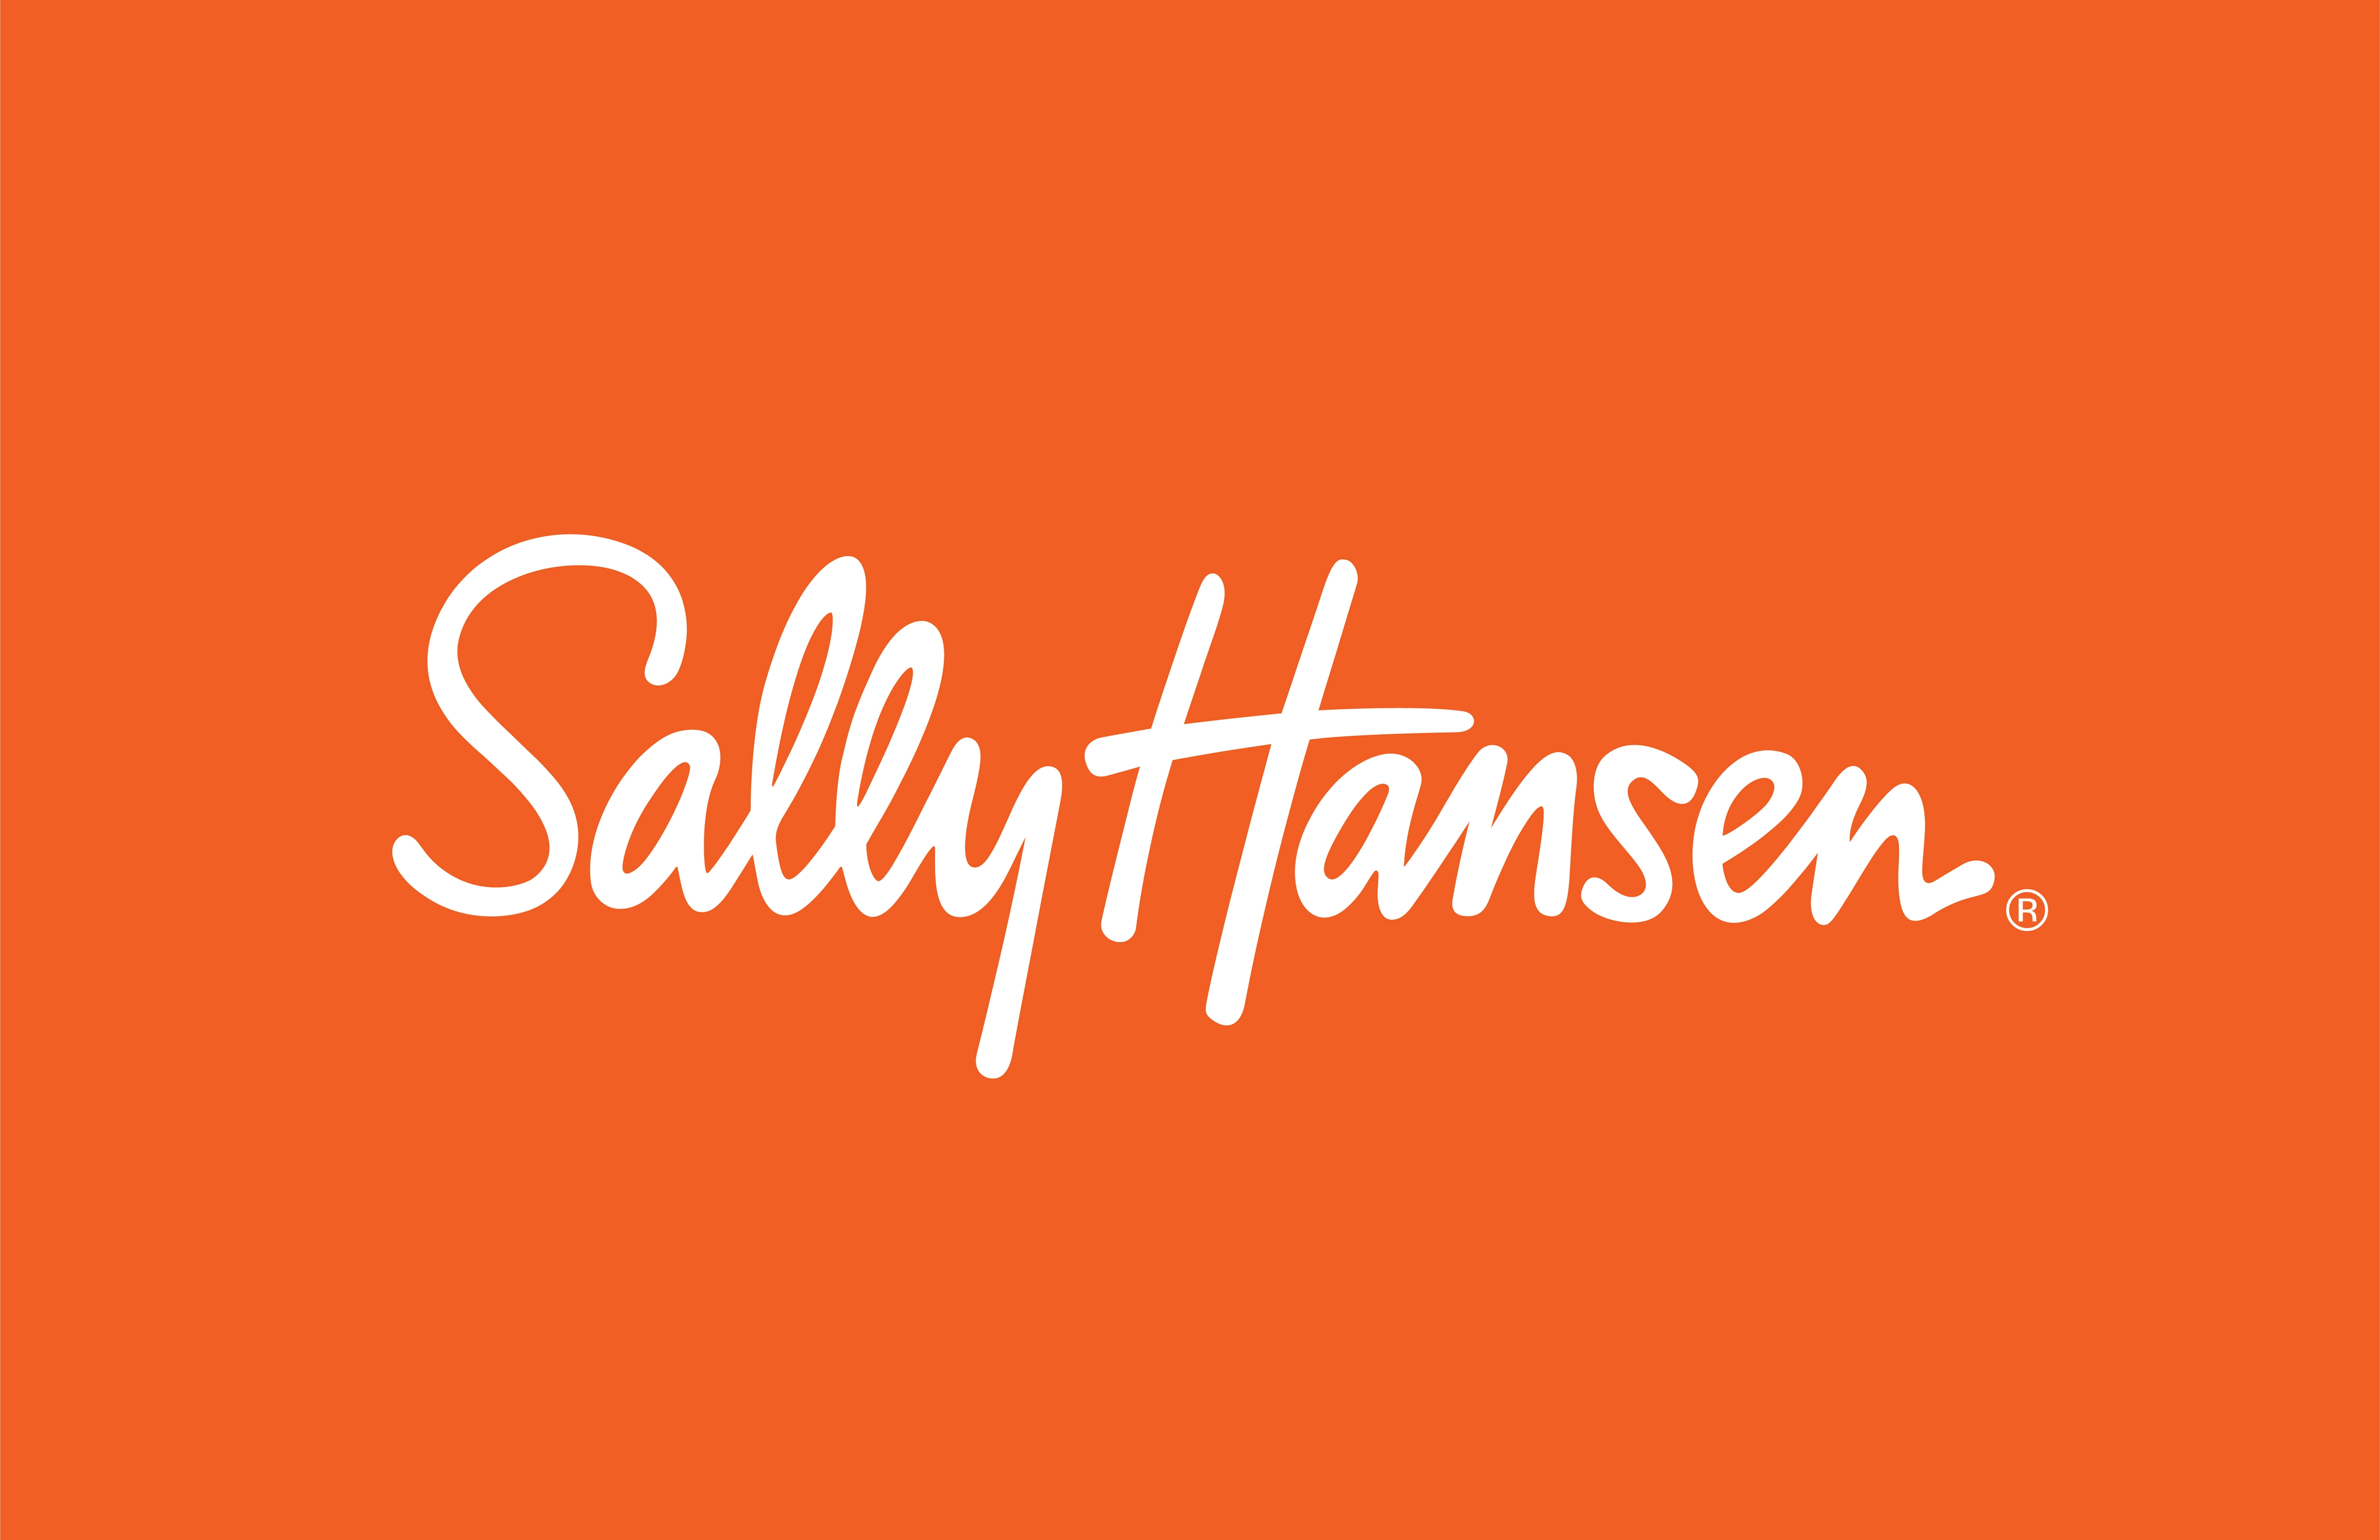 Sally Hansen Treatment Complete 7 in 1 Salon Manicure, .41 fl oz, Treatment, Strengthener, Hardener - image 6 of 6